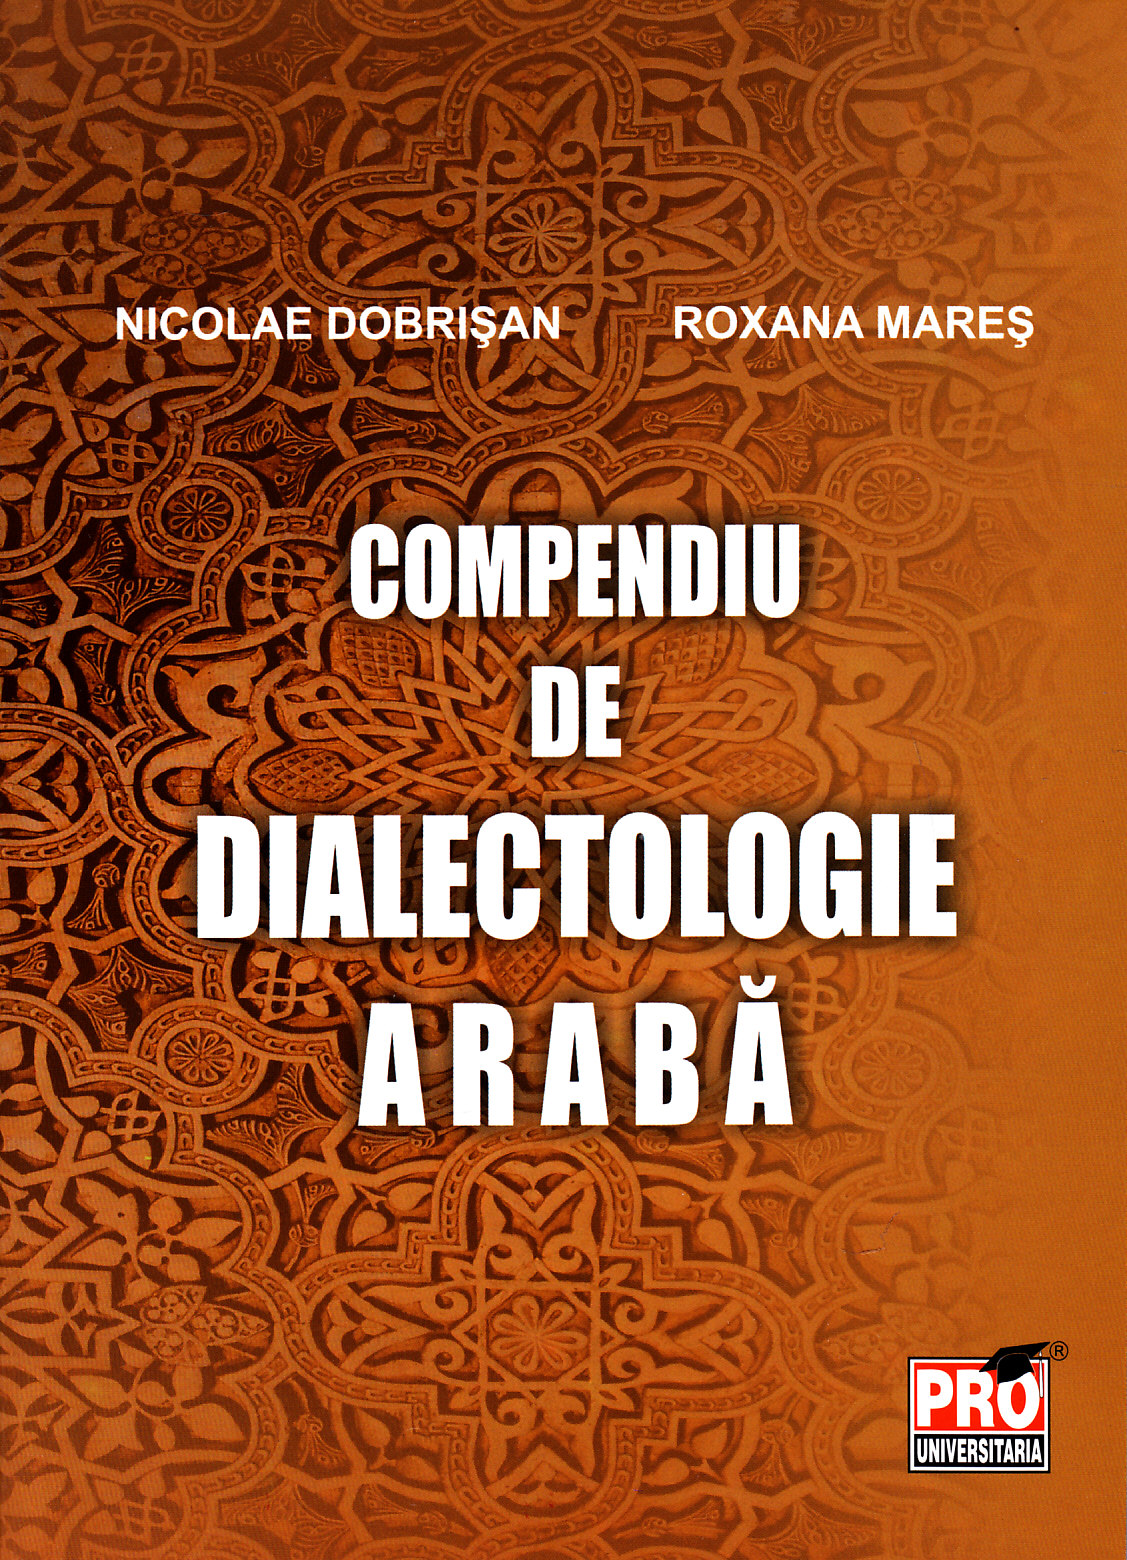 Compendiu de dialectologie araba - Nicolae Dobrisan, Roxana Mares